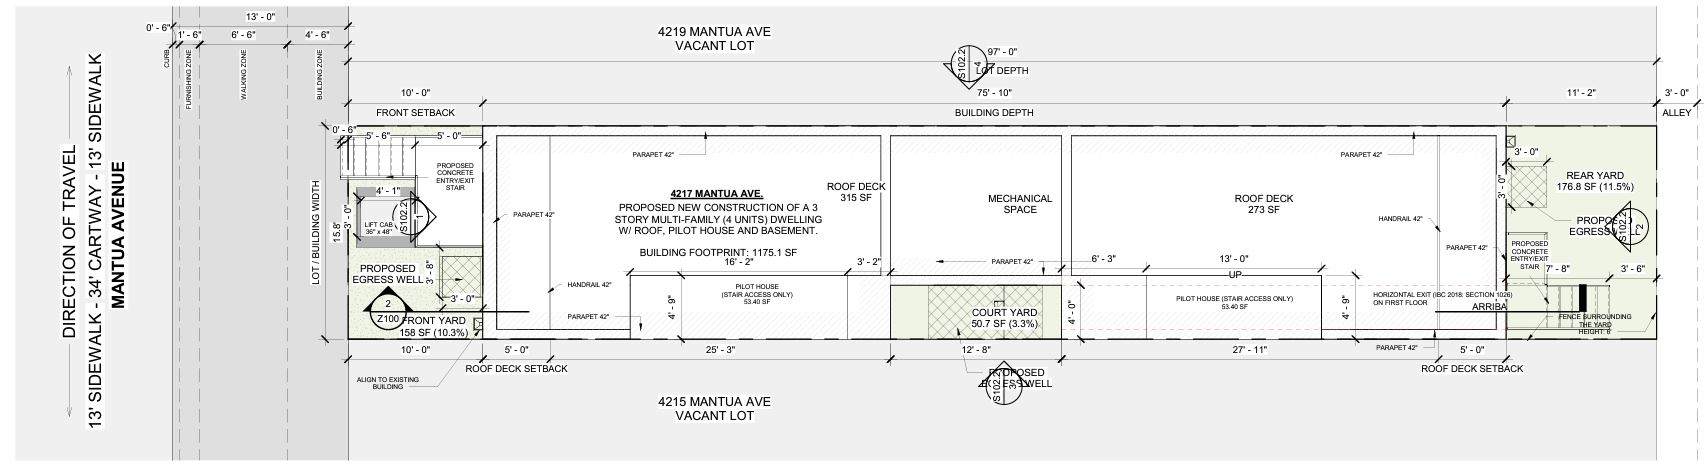 4217 Mantua Avenue Site Plan